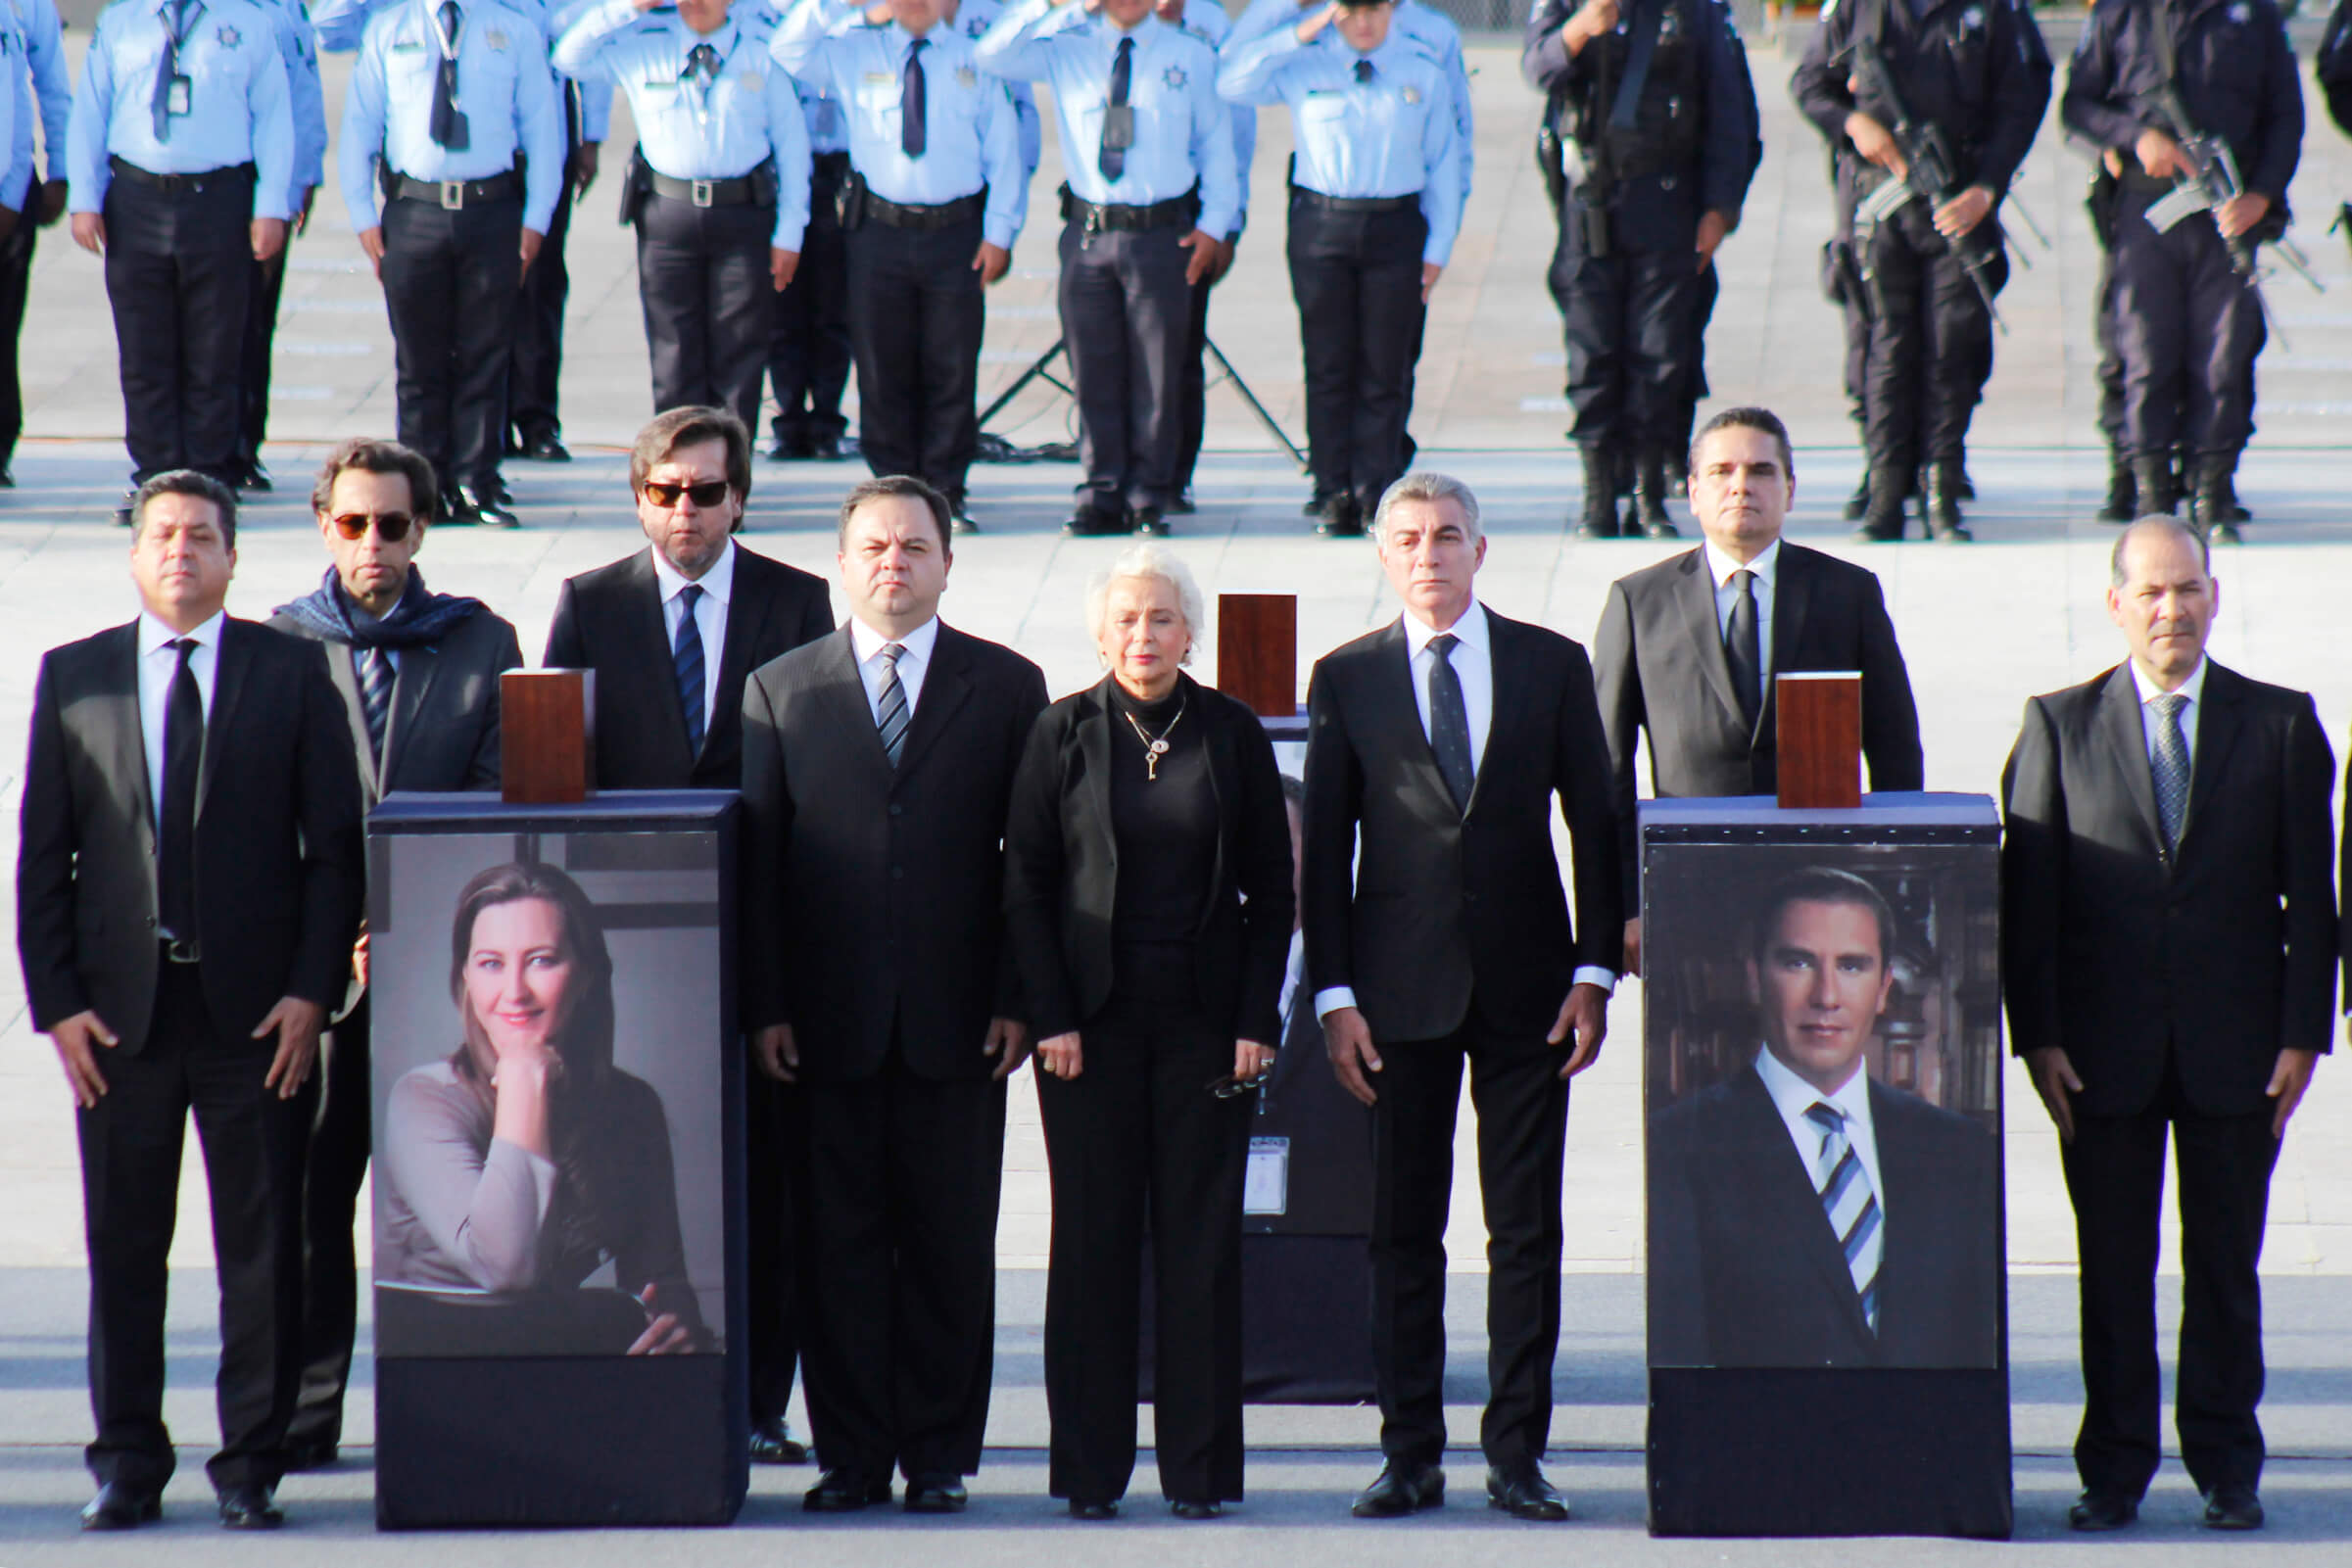 Realizan funeral de estado en honor a Martha Erika Alonso y Moreno Valle